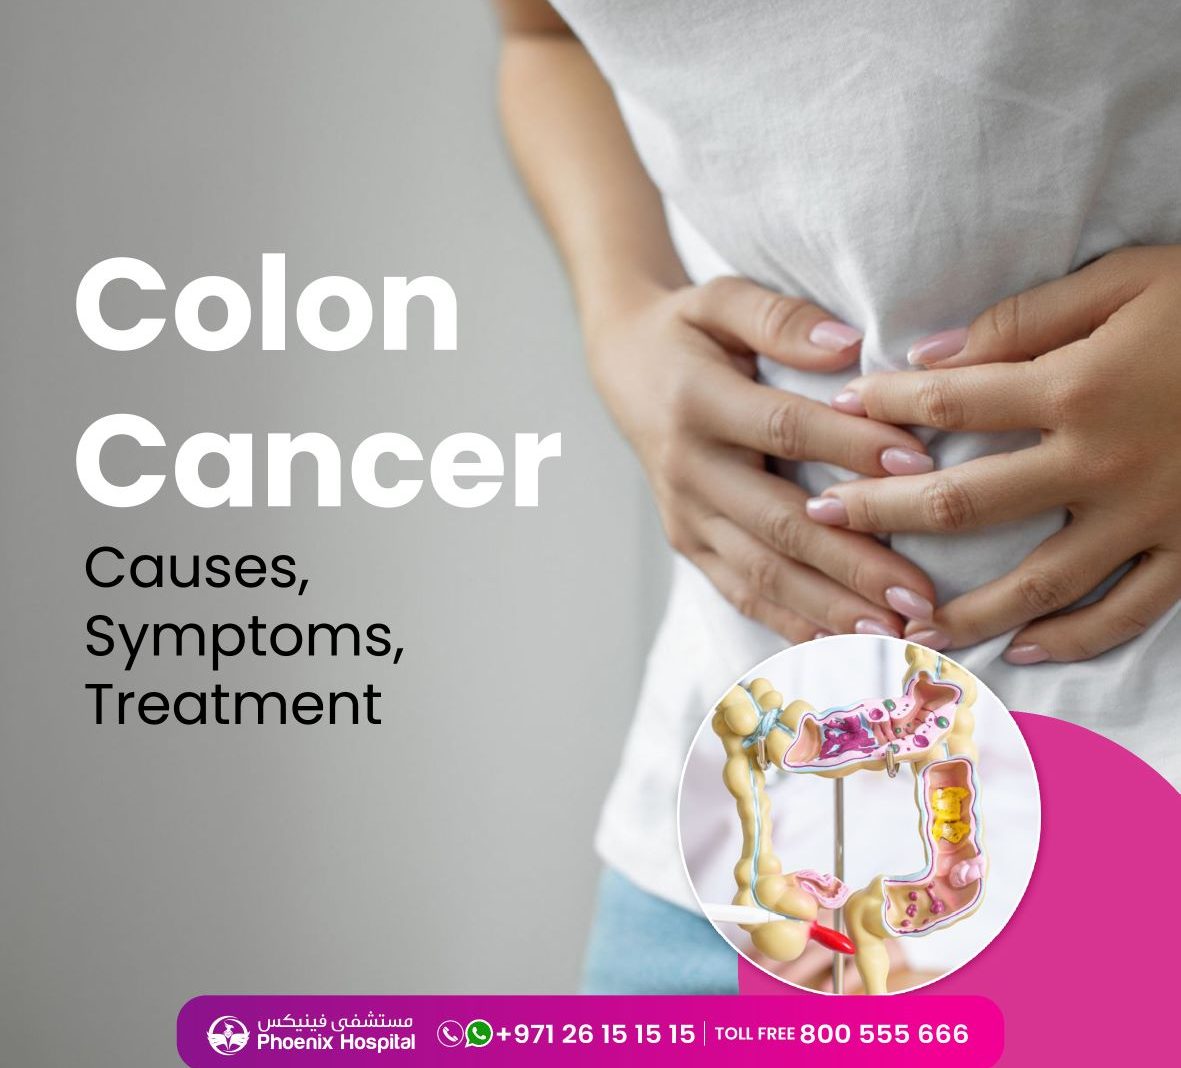 "colon cancer"